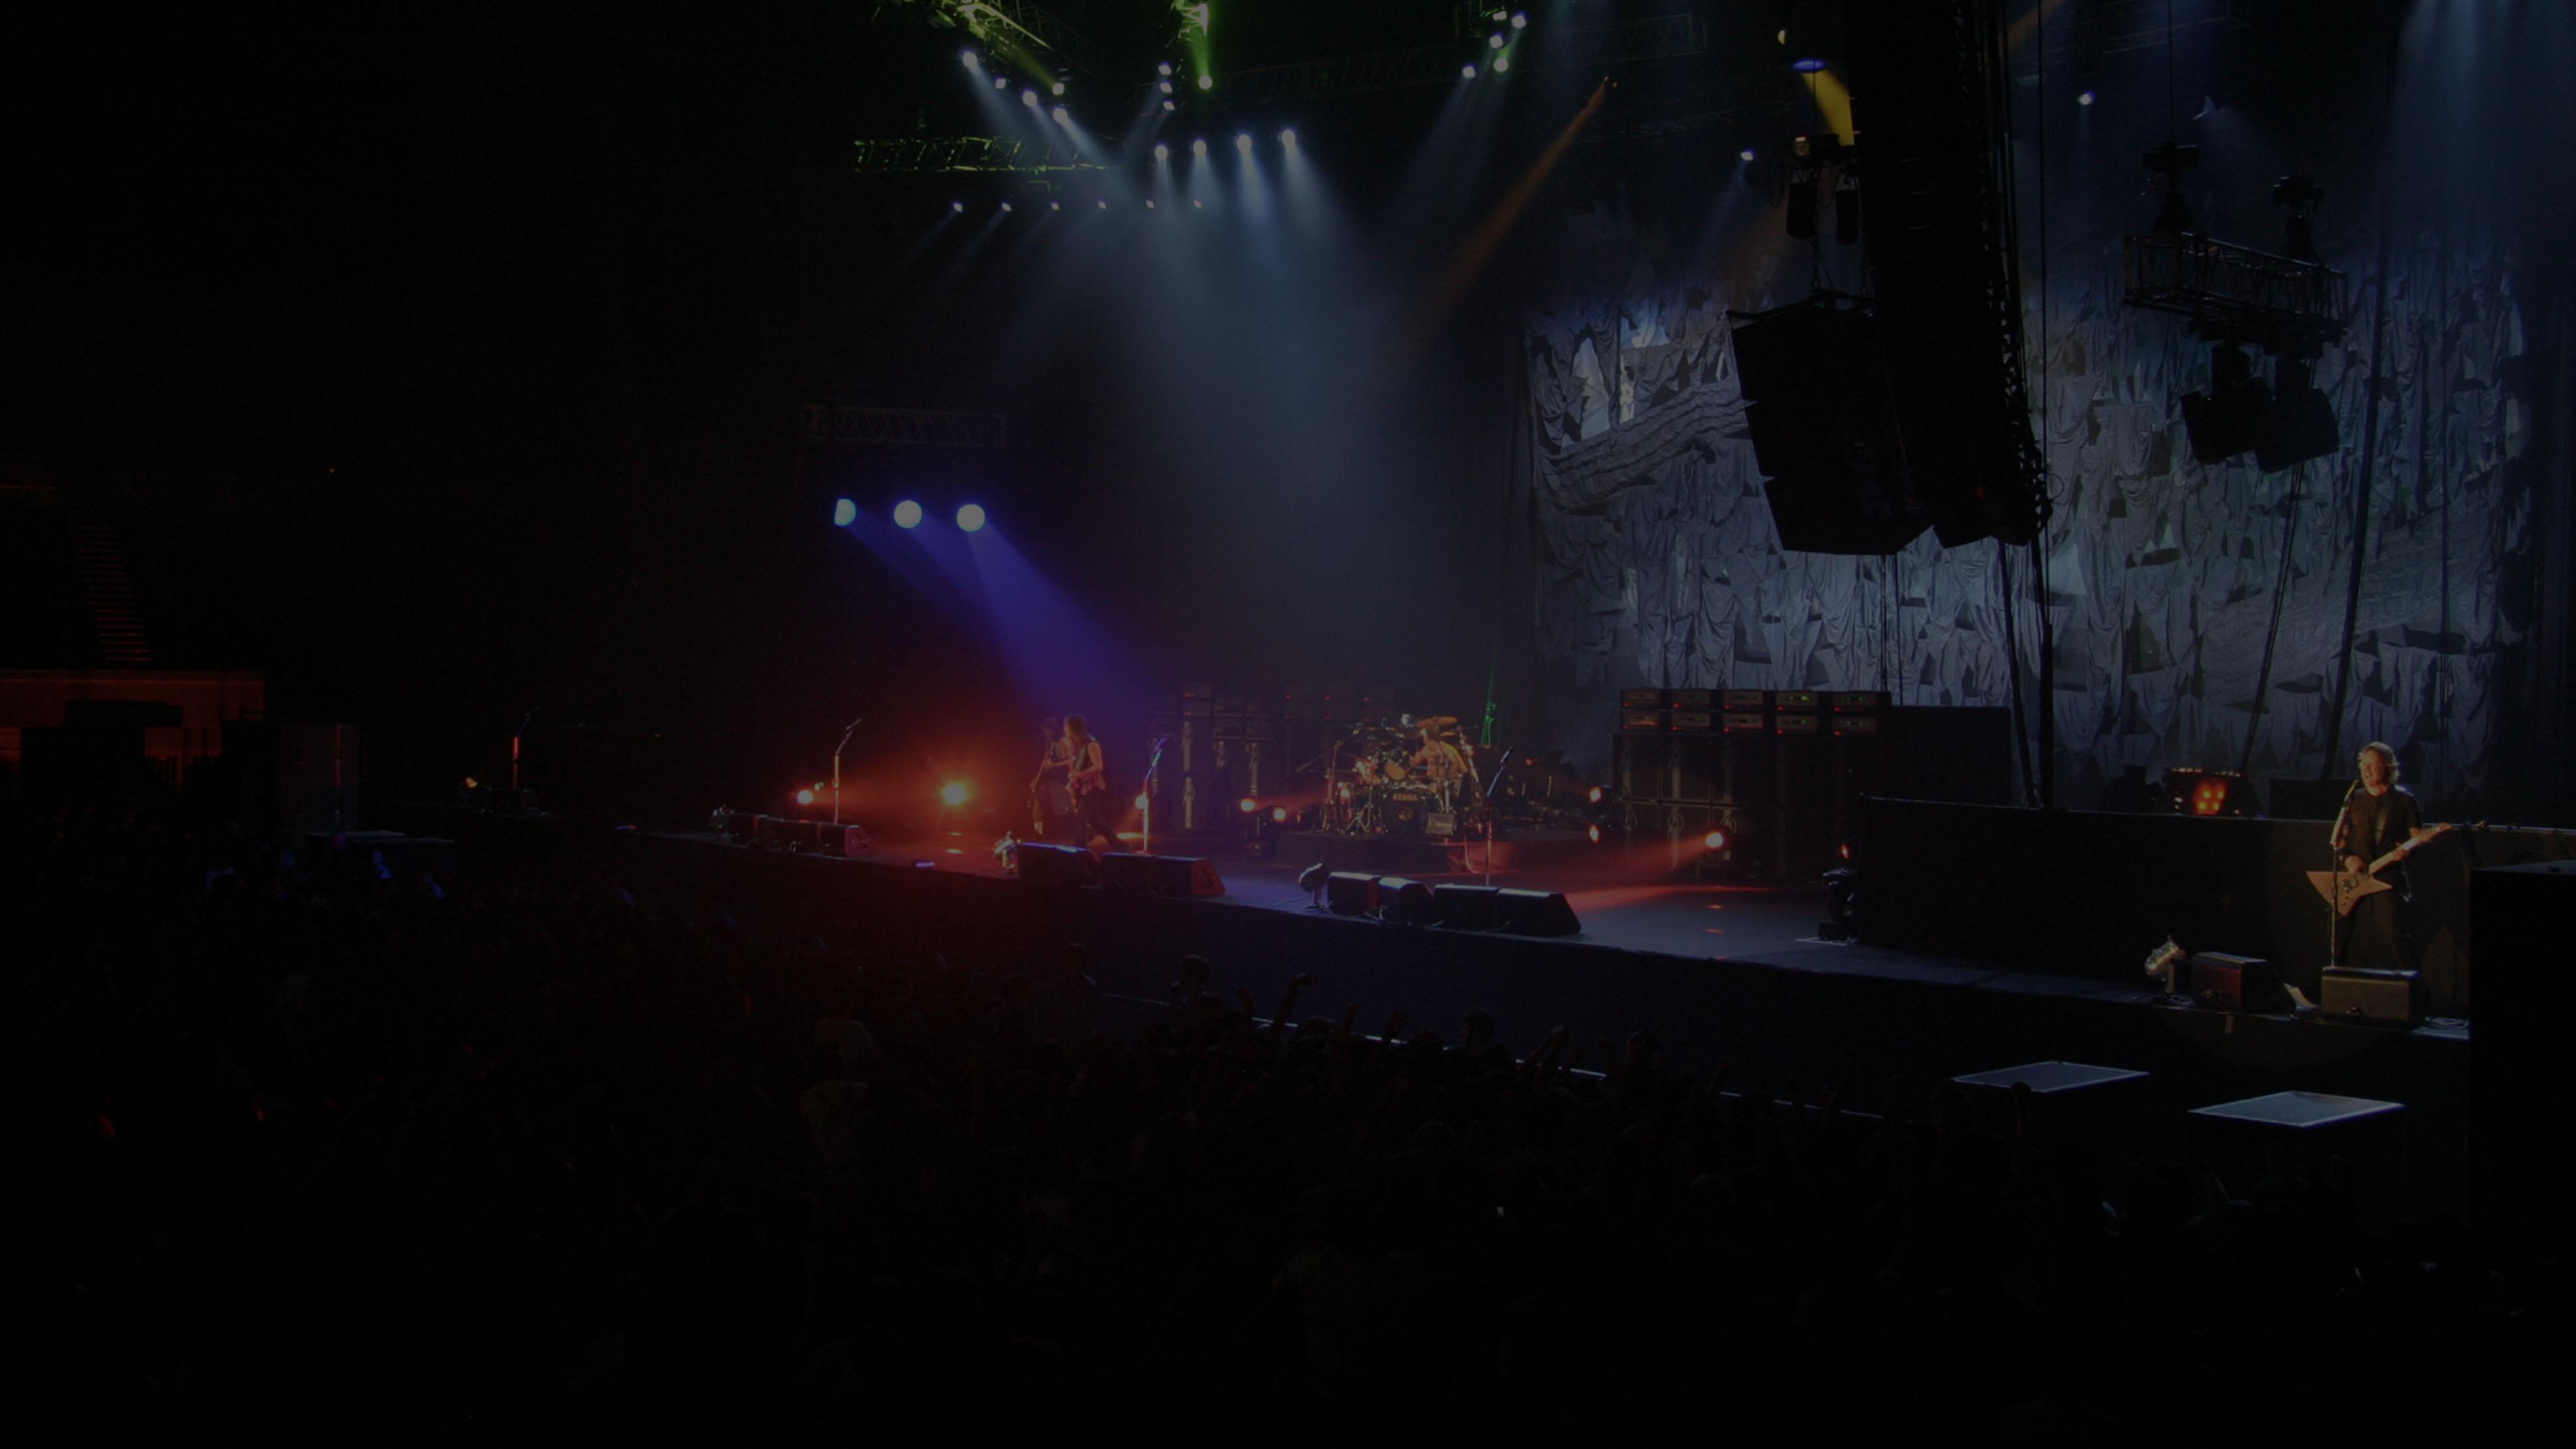 Metallica at Rainbow Hall in Nagoya, Japan on November 14, 2003